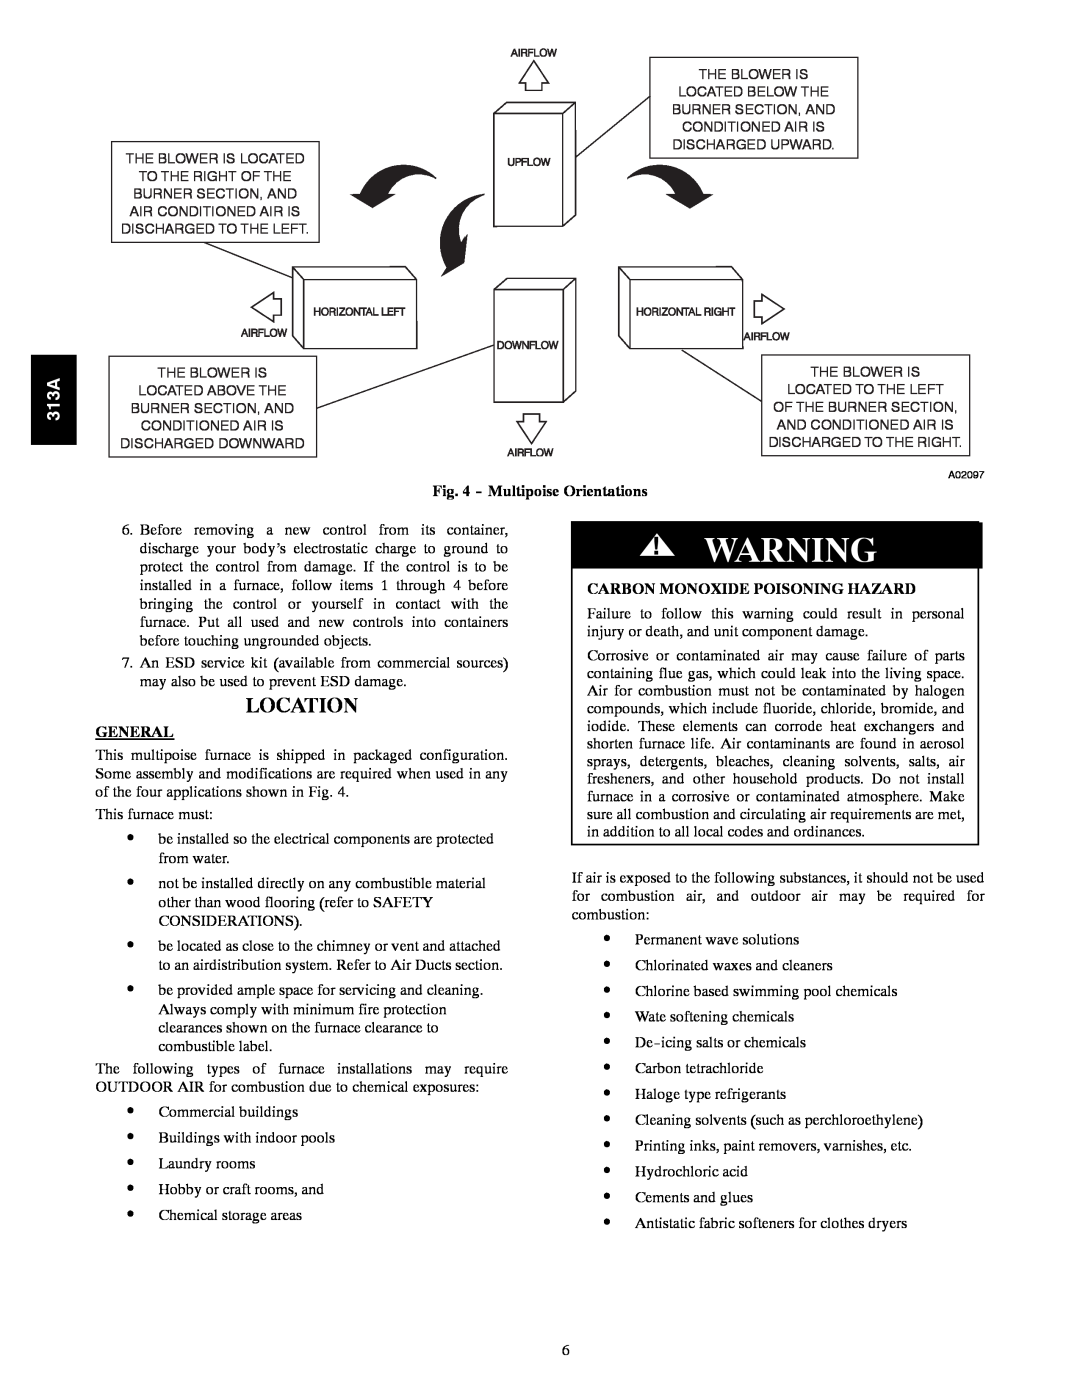 Bryant 313AAV instruction manual Location, Multipoise Orientations, General, Carbon Monoxide Poisoning Hazard 